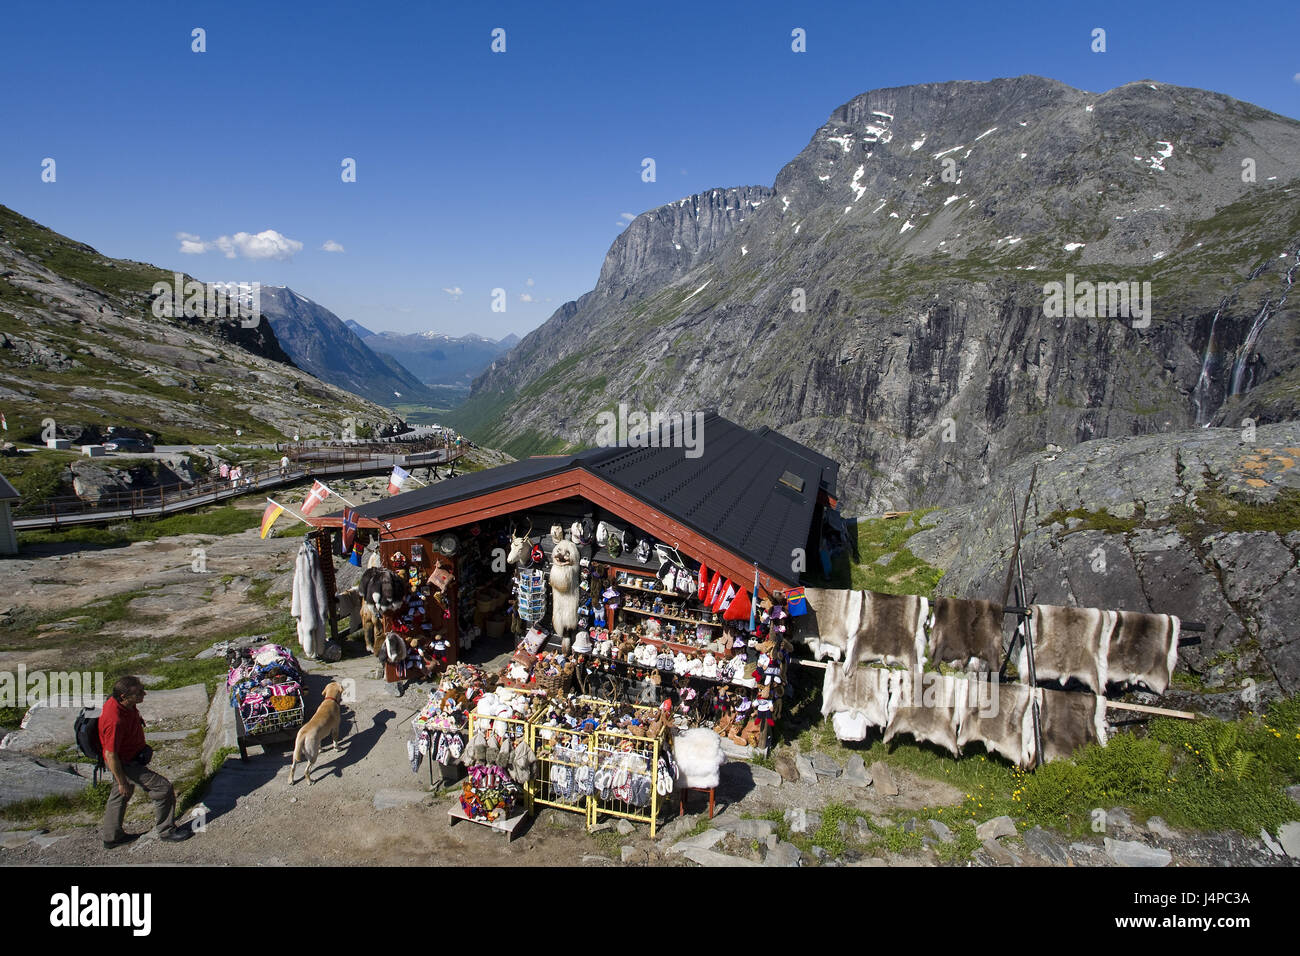 La Norvège, More og Romsdal, Trollstigen, affaires, souvenir Banque D'Images